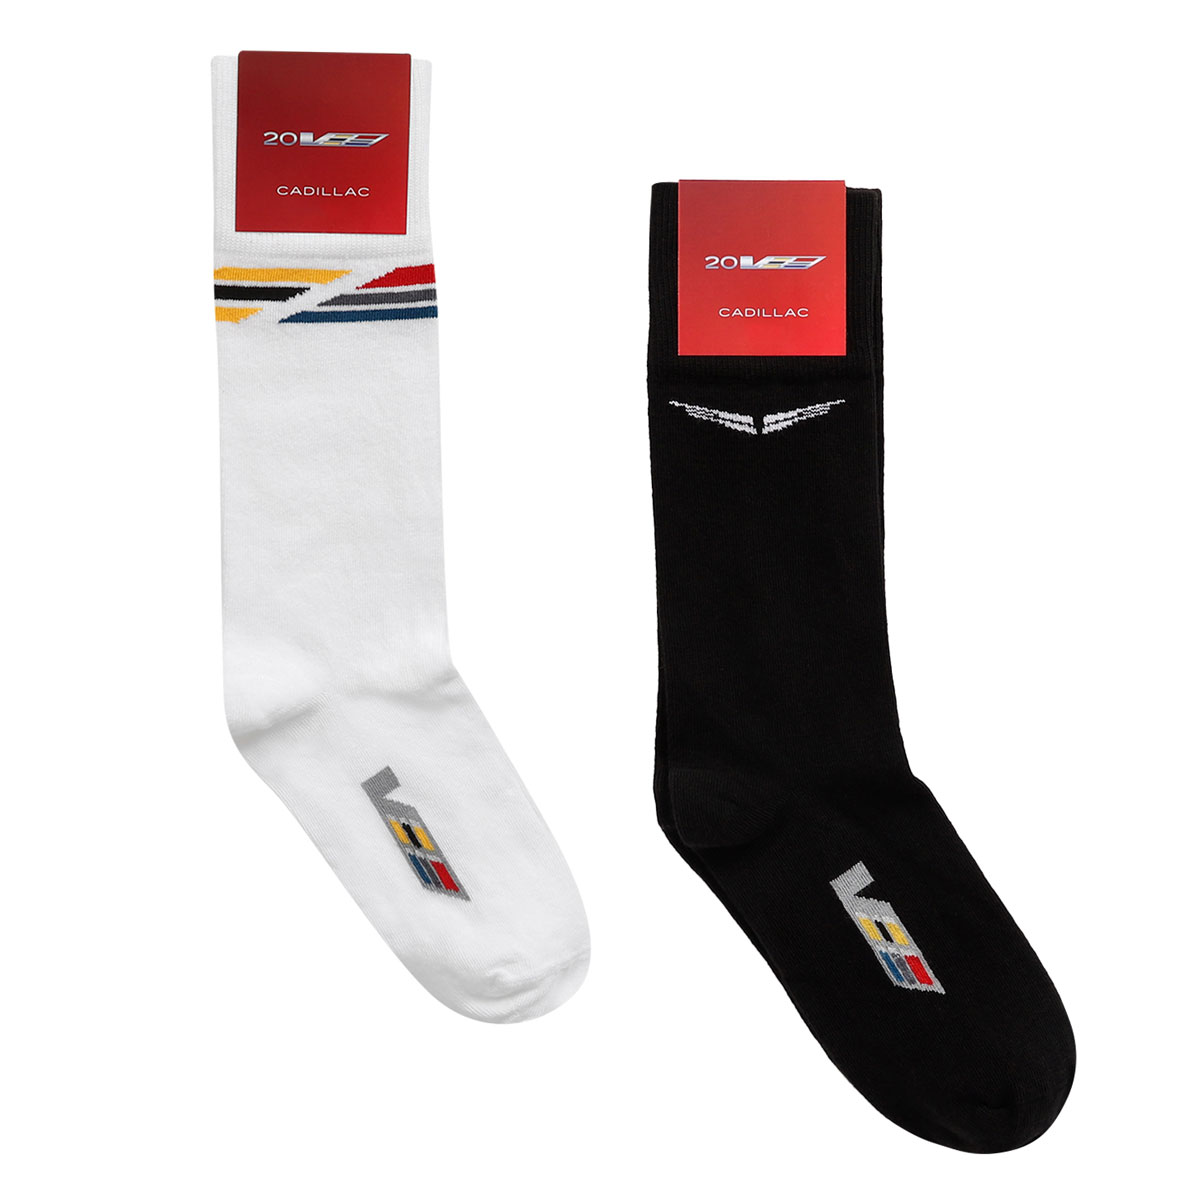 20th Anniversary Black & White V-Series Socks